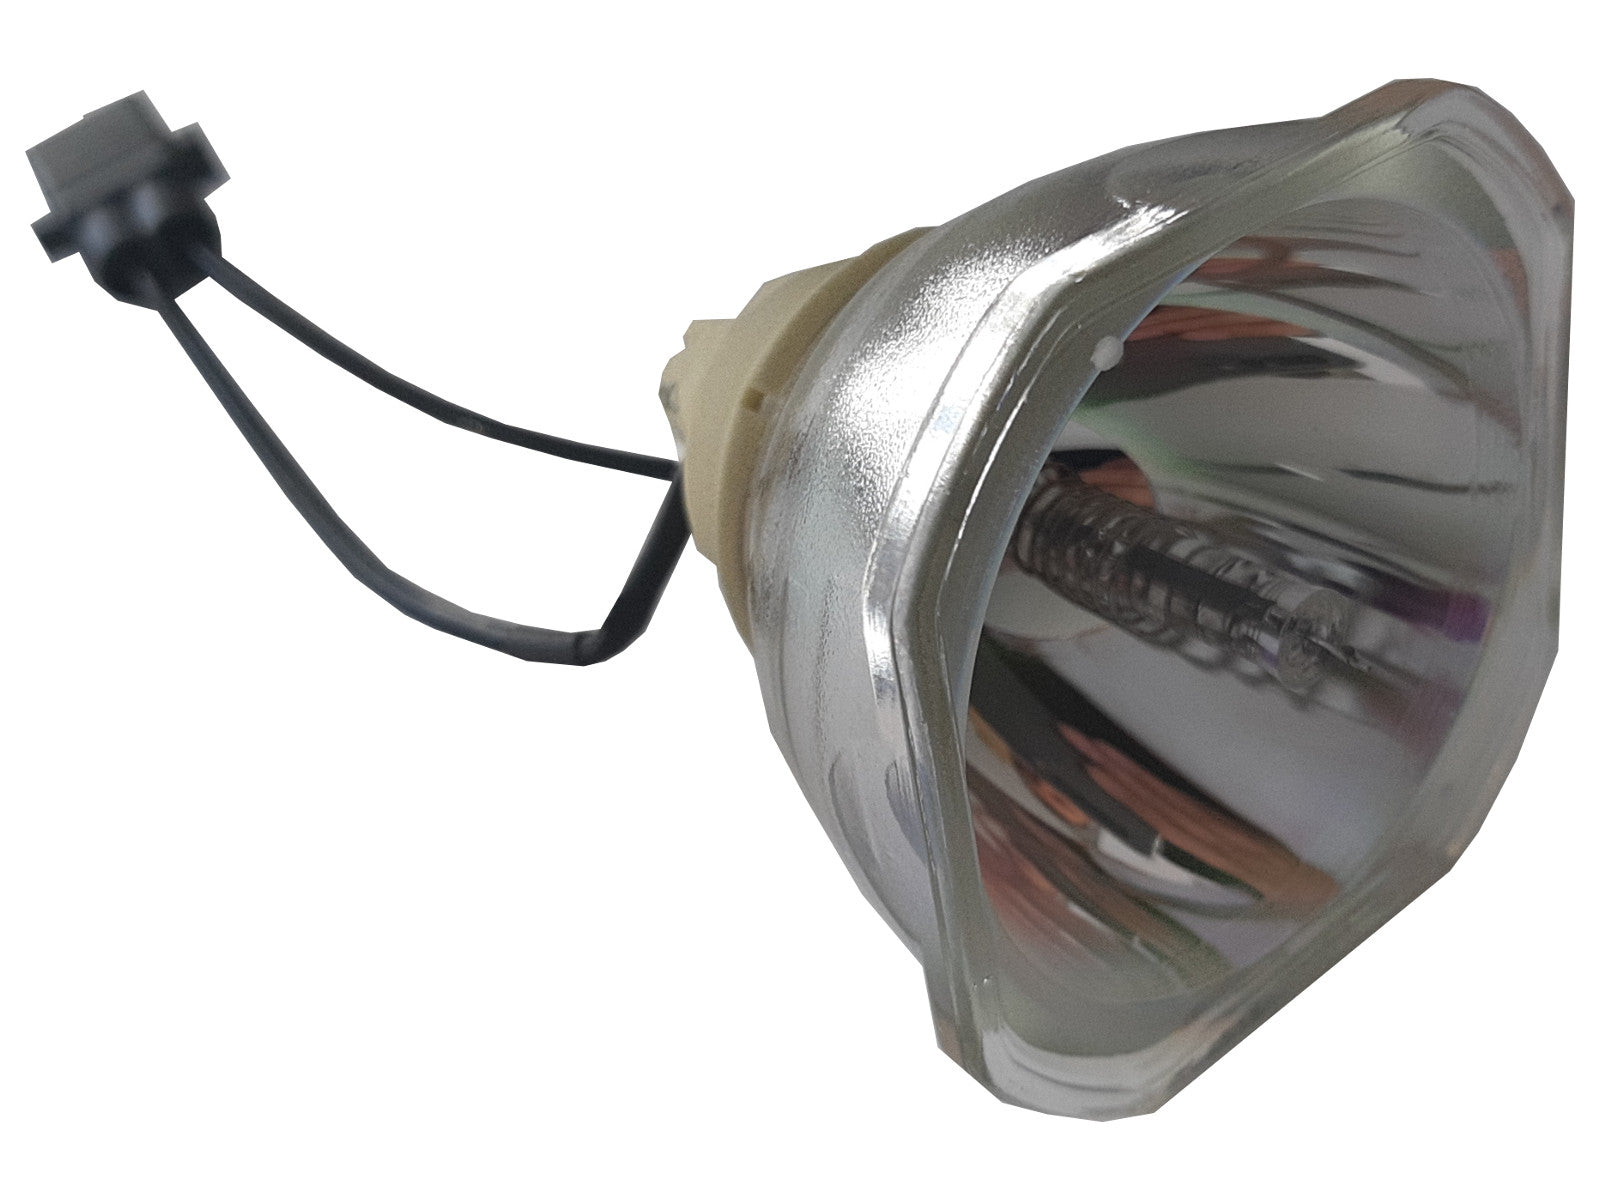 PHILIPS Beamerlampe für EPSON ELPLP78, V13H010L78 - Bild 1